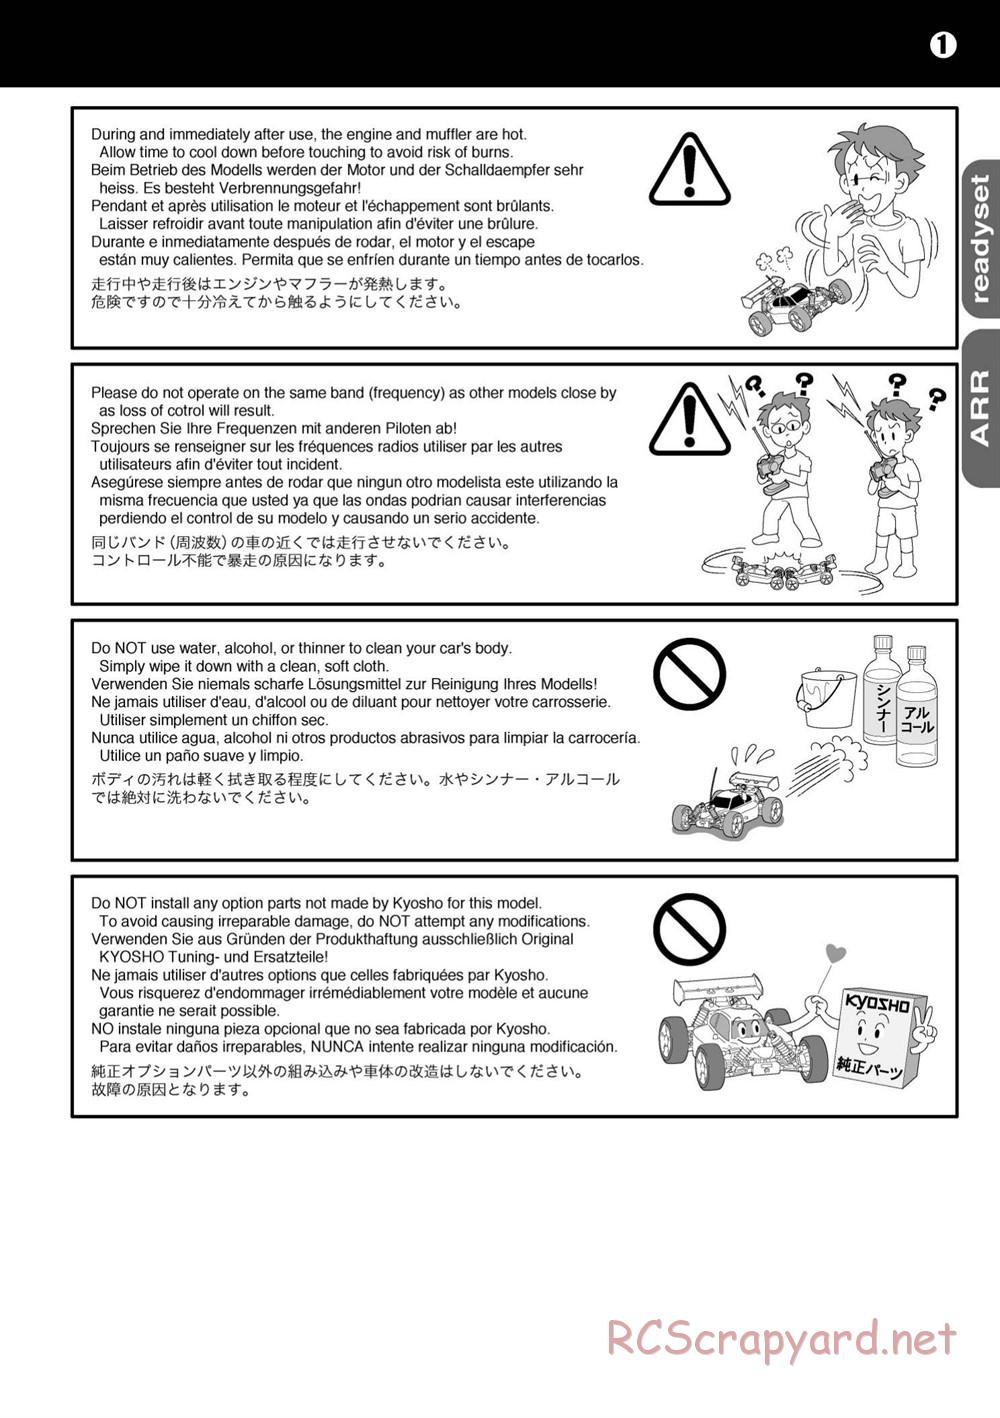 Kyosho - Mini Inferno 09 - Manual - Page 5